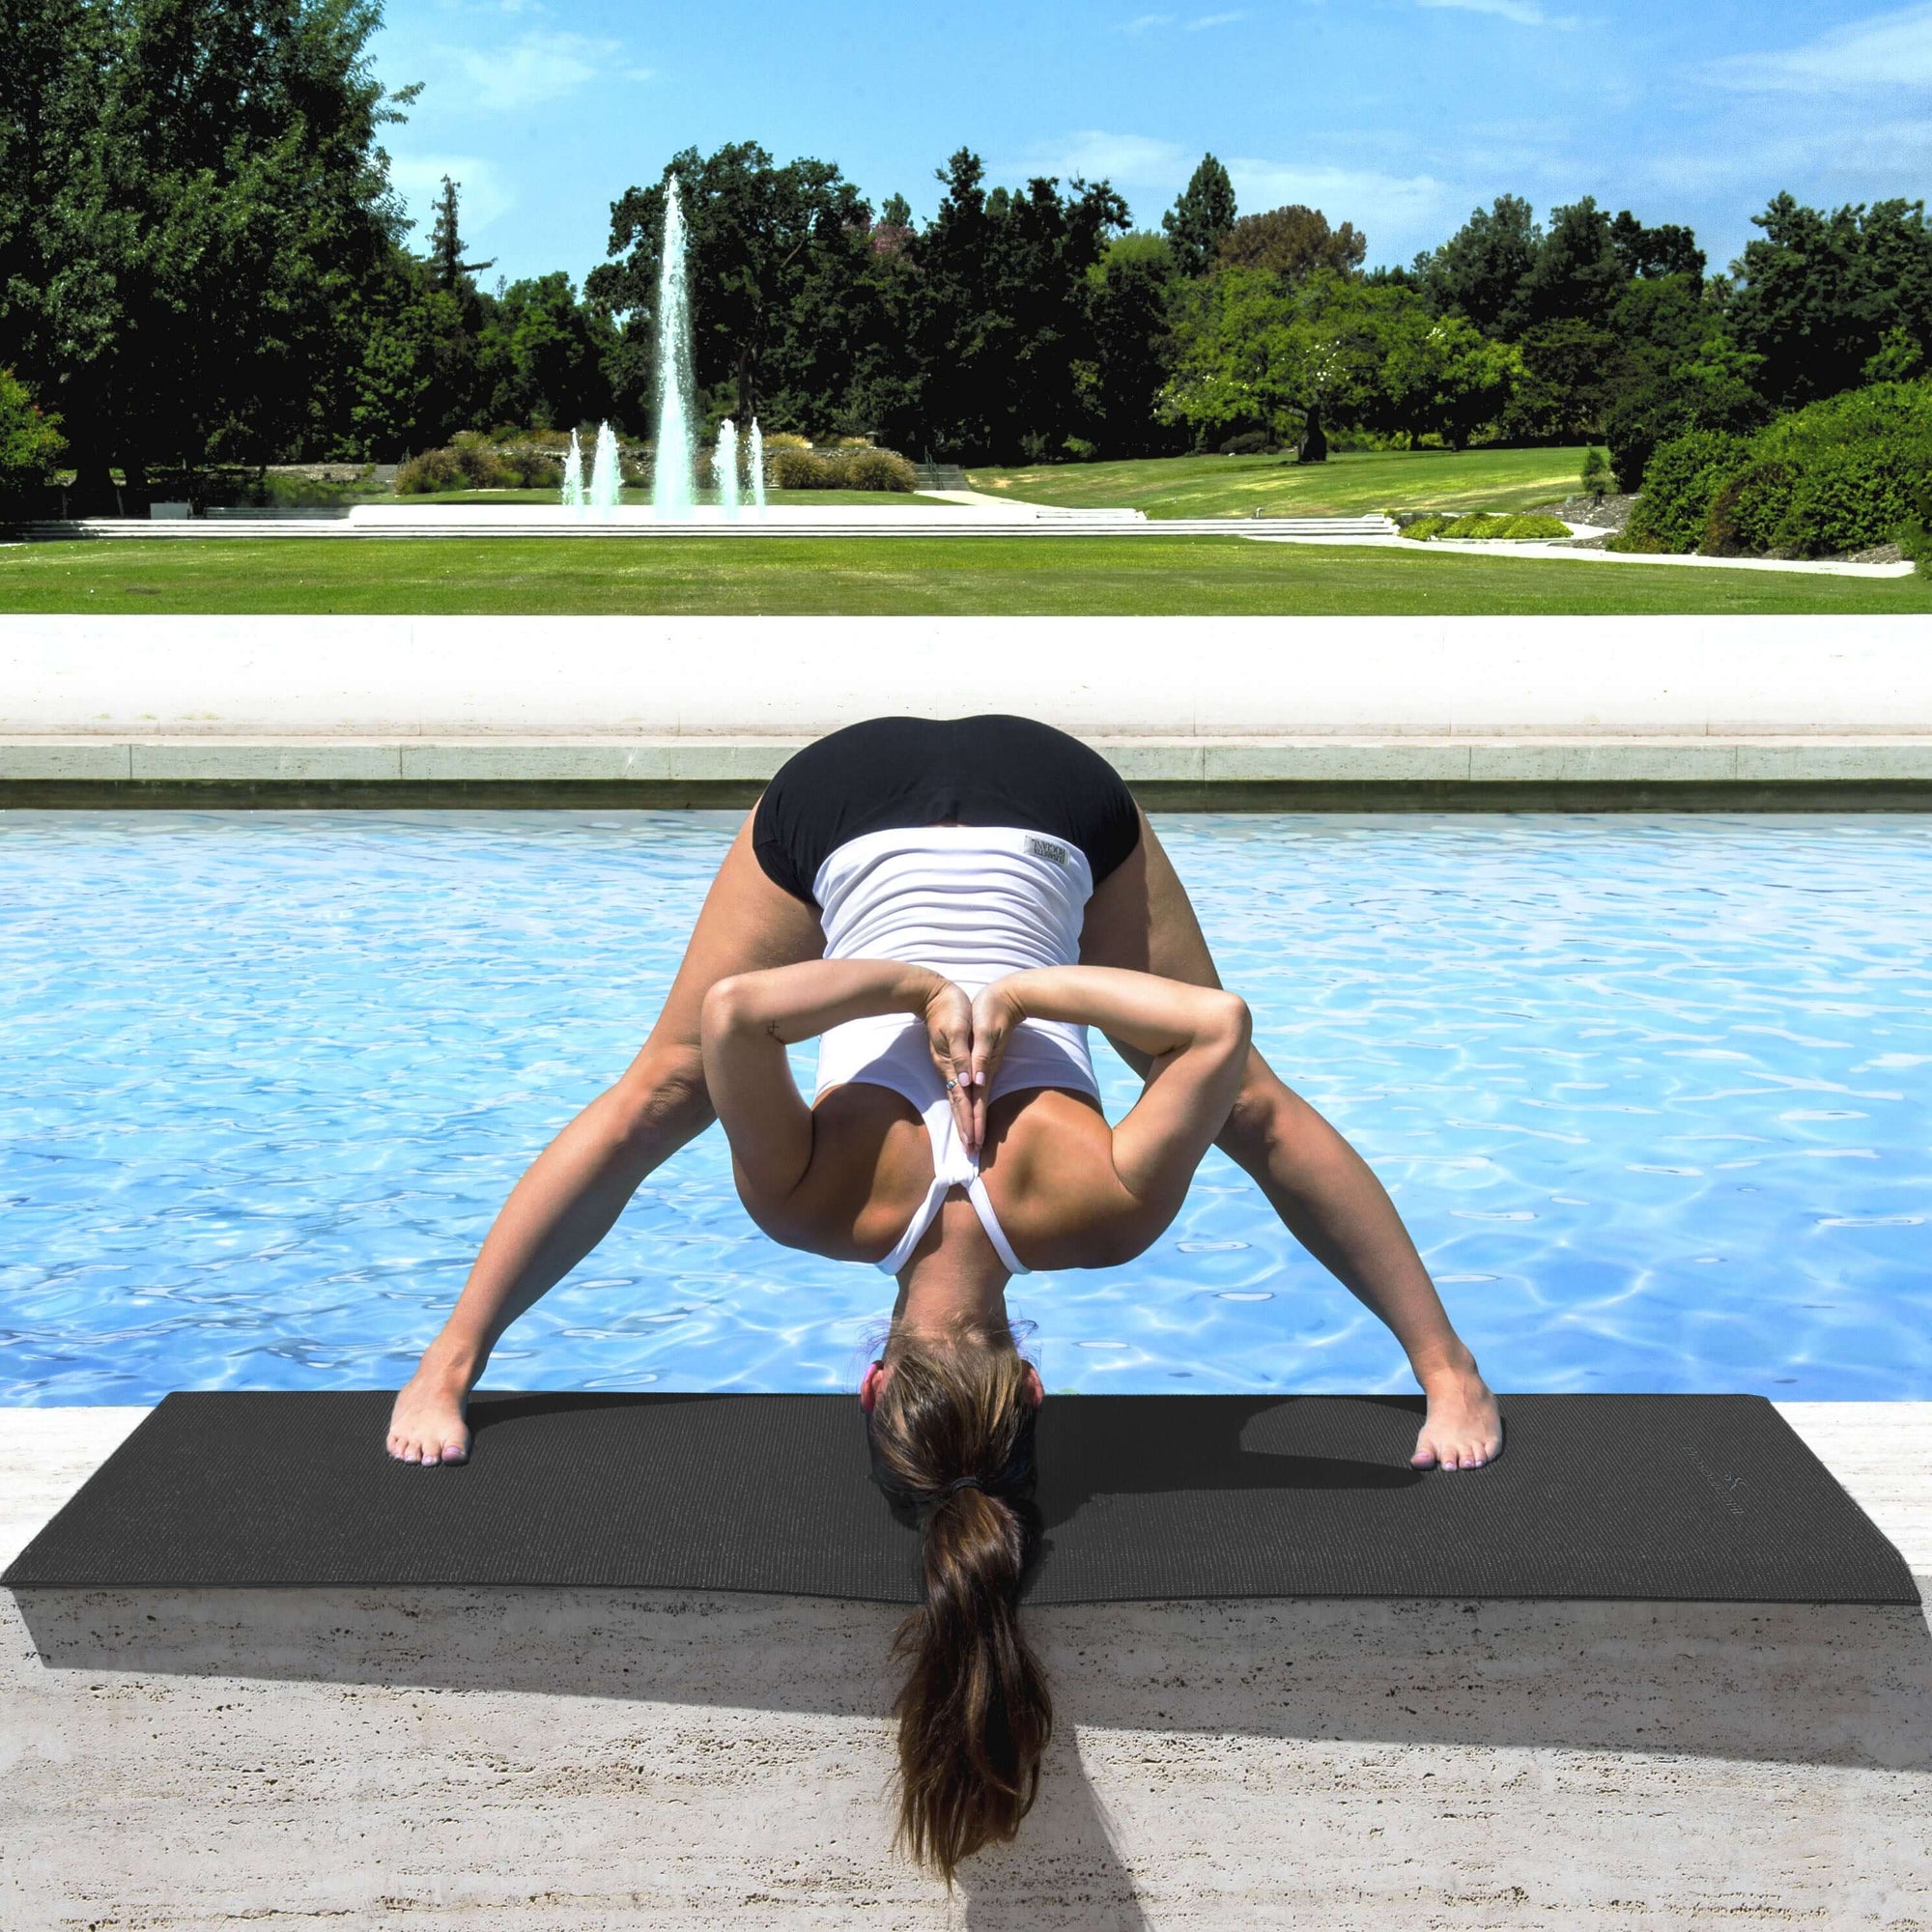 Extra Thick Yoga and Pilates Mat 1 inch - Aqua Blue